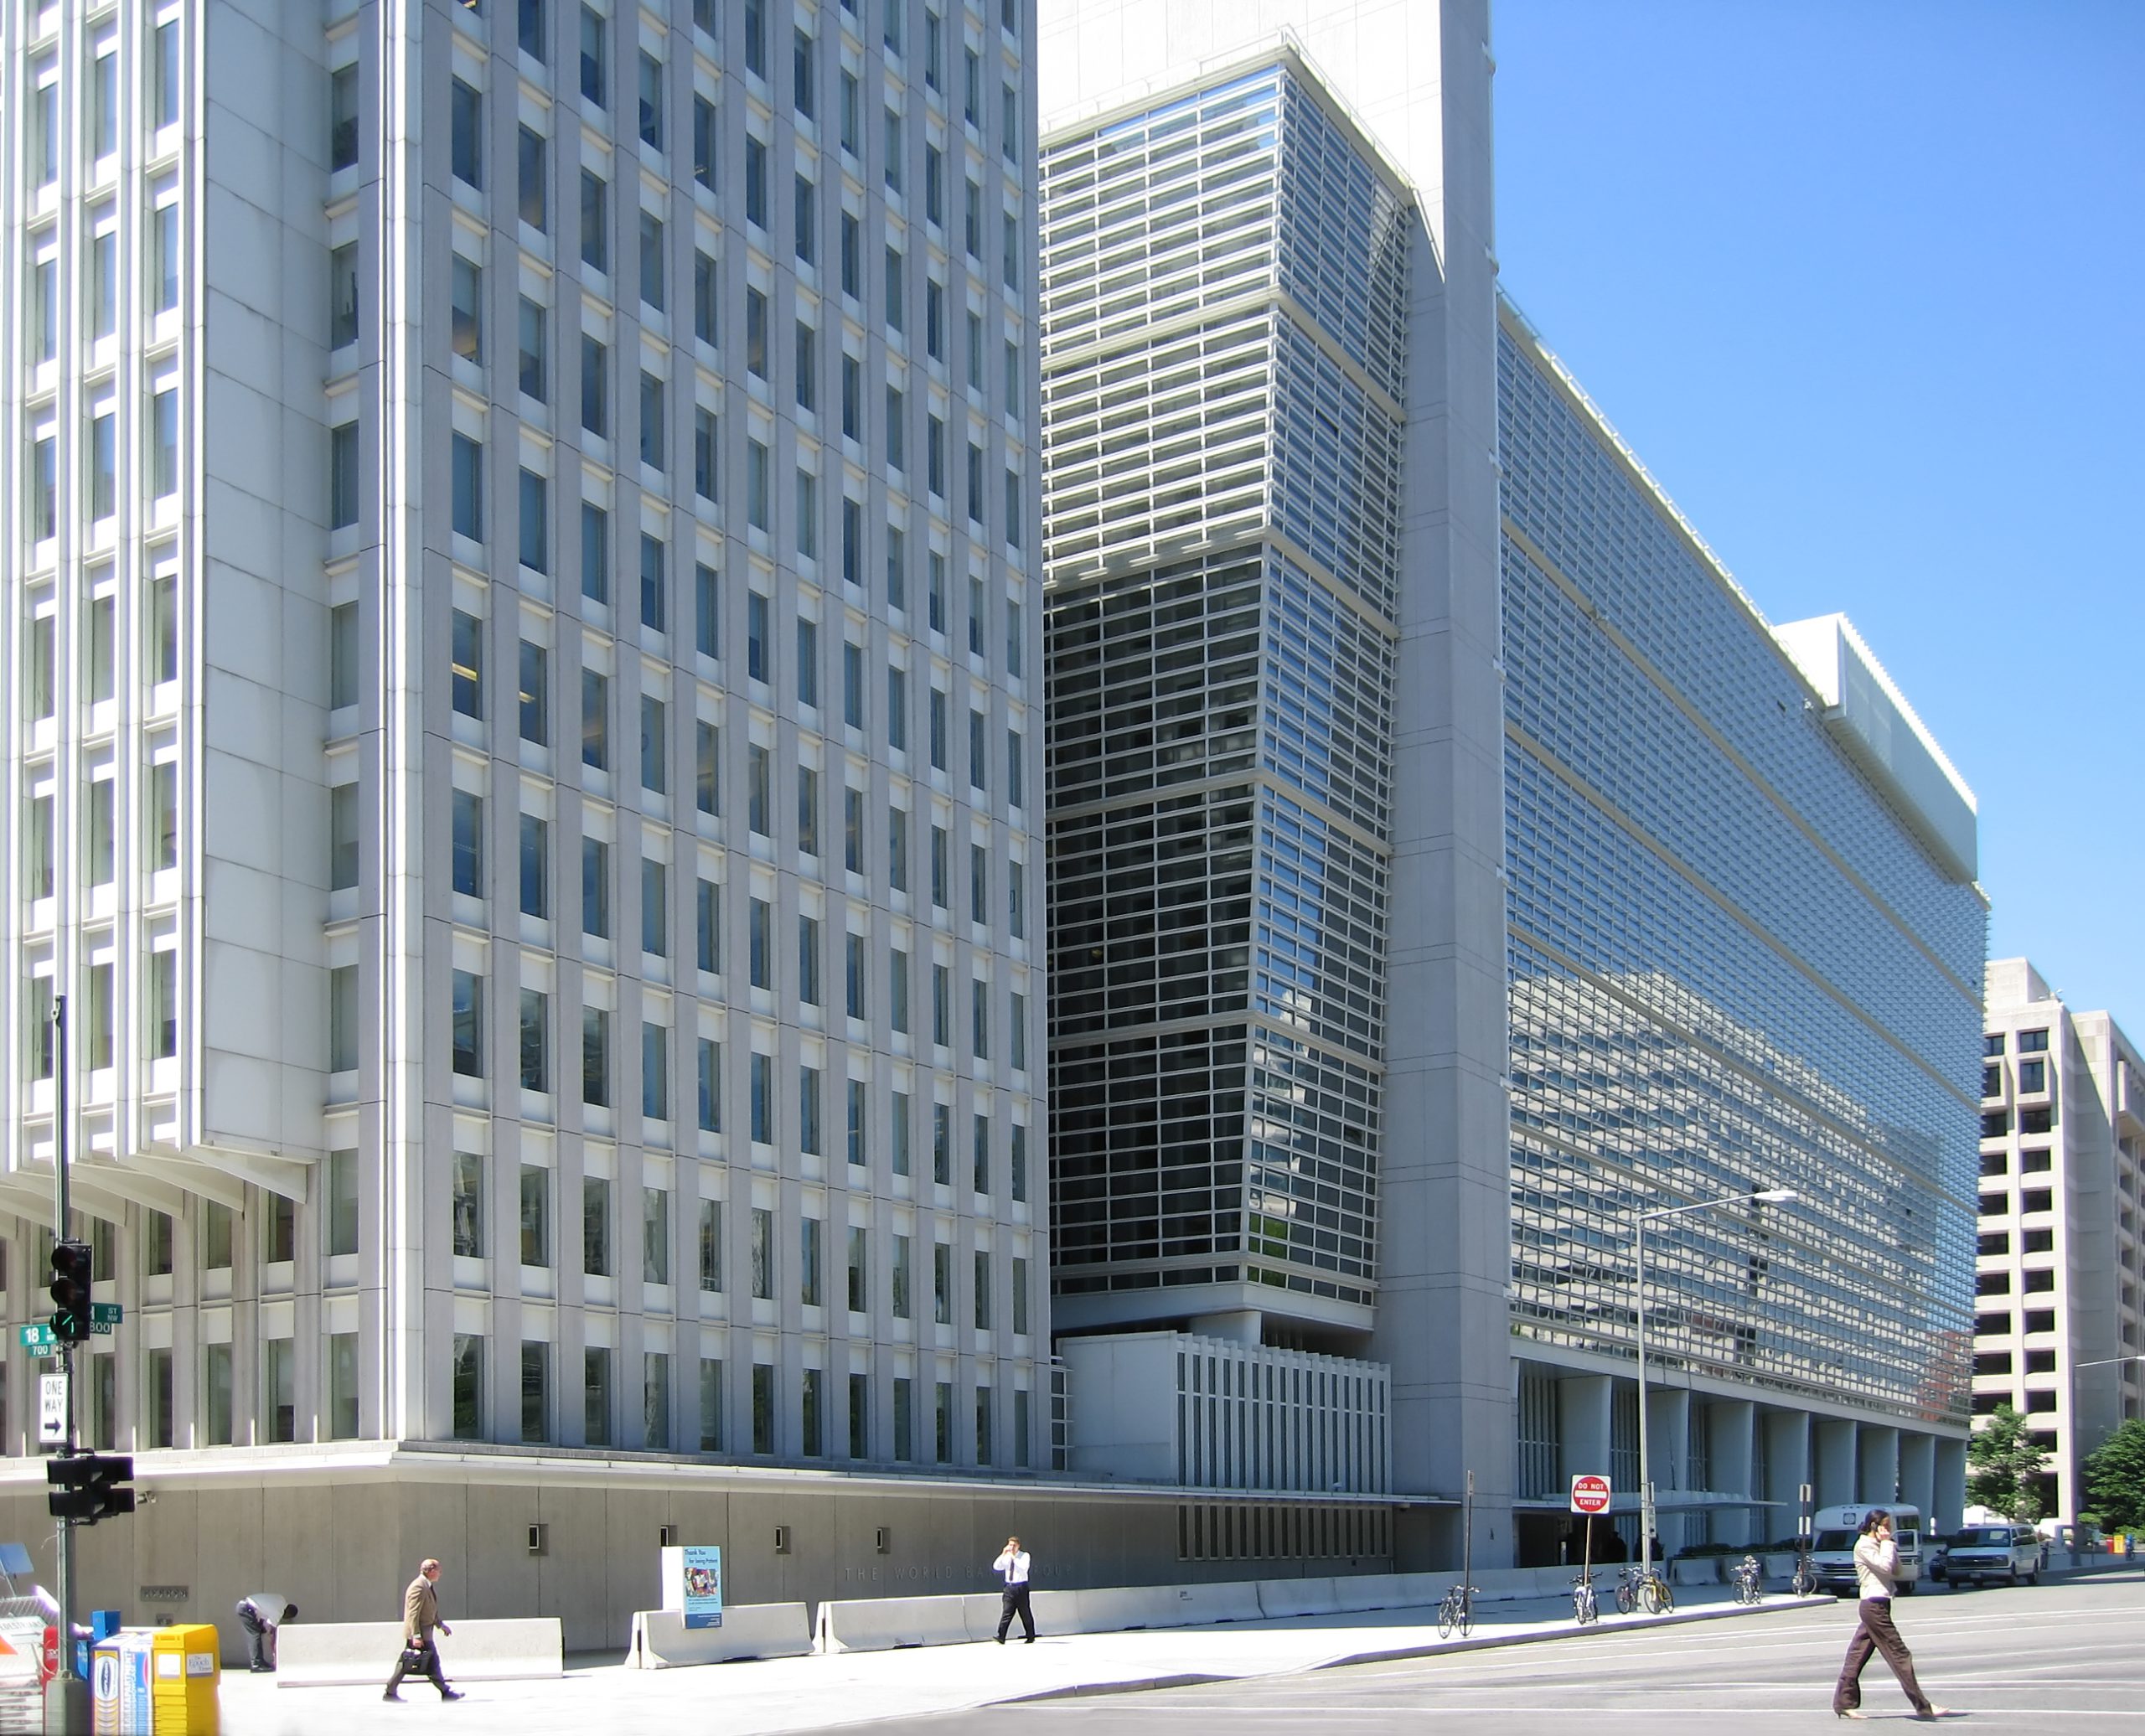 World Bank building at Washington scaled